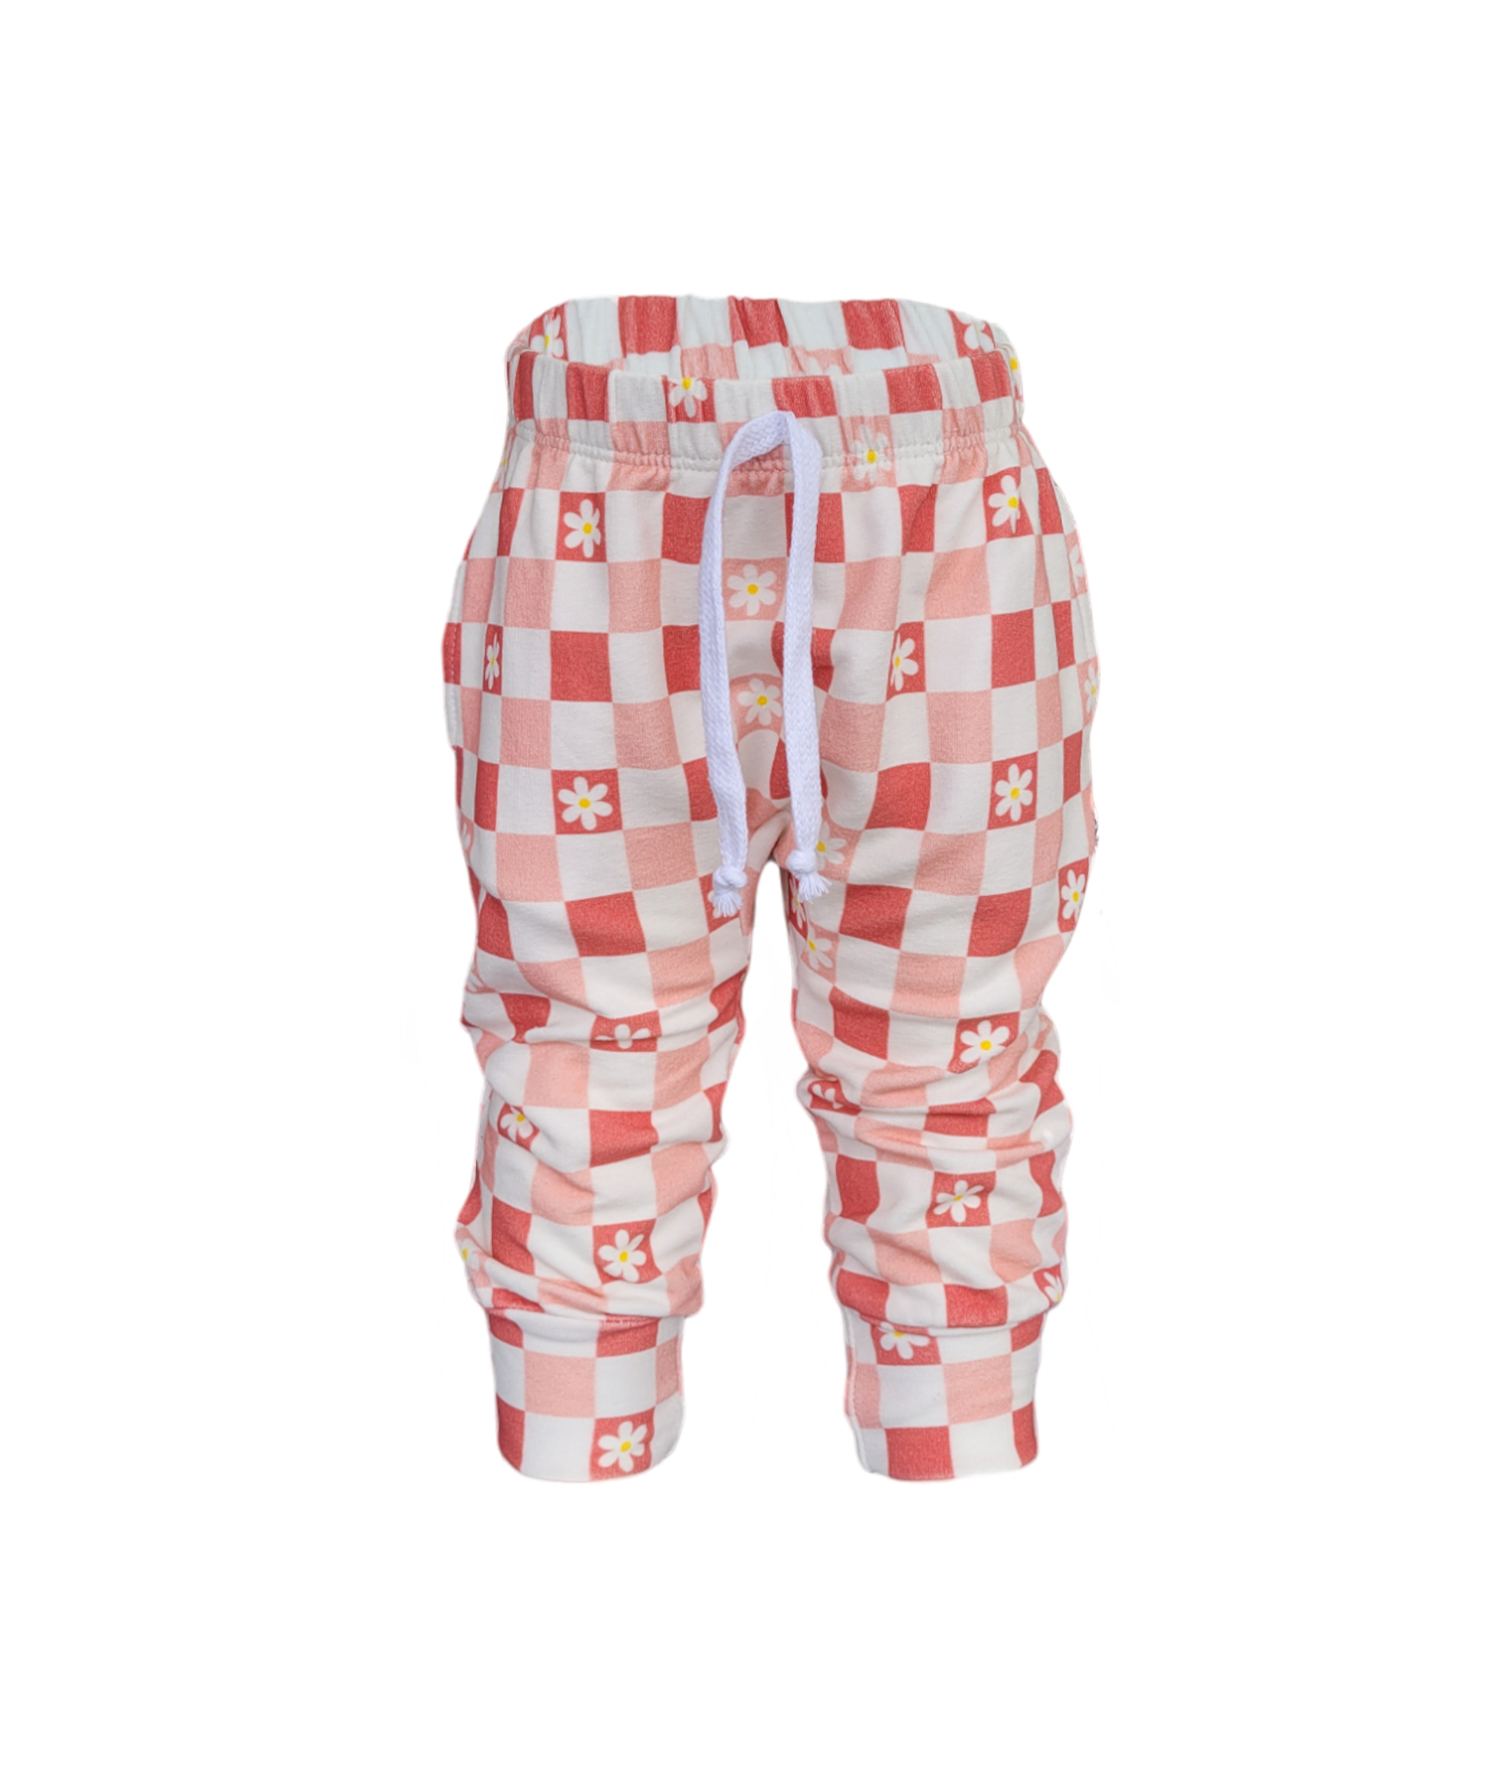 Front of Pink Daisy Sweatpants. Organic white and Pink Checkered sweatpants with white daisy's. 